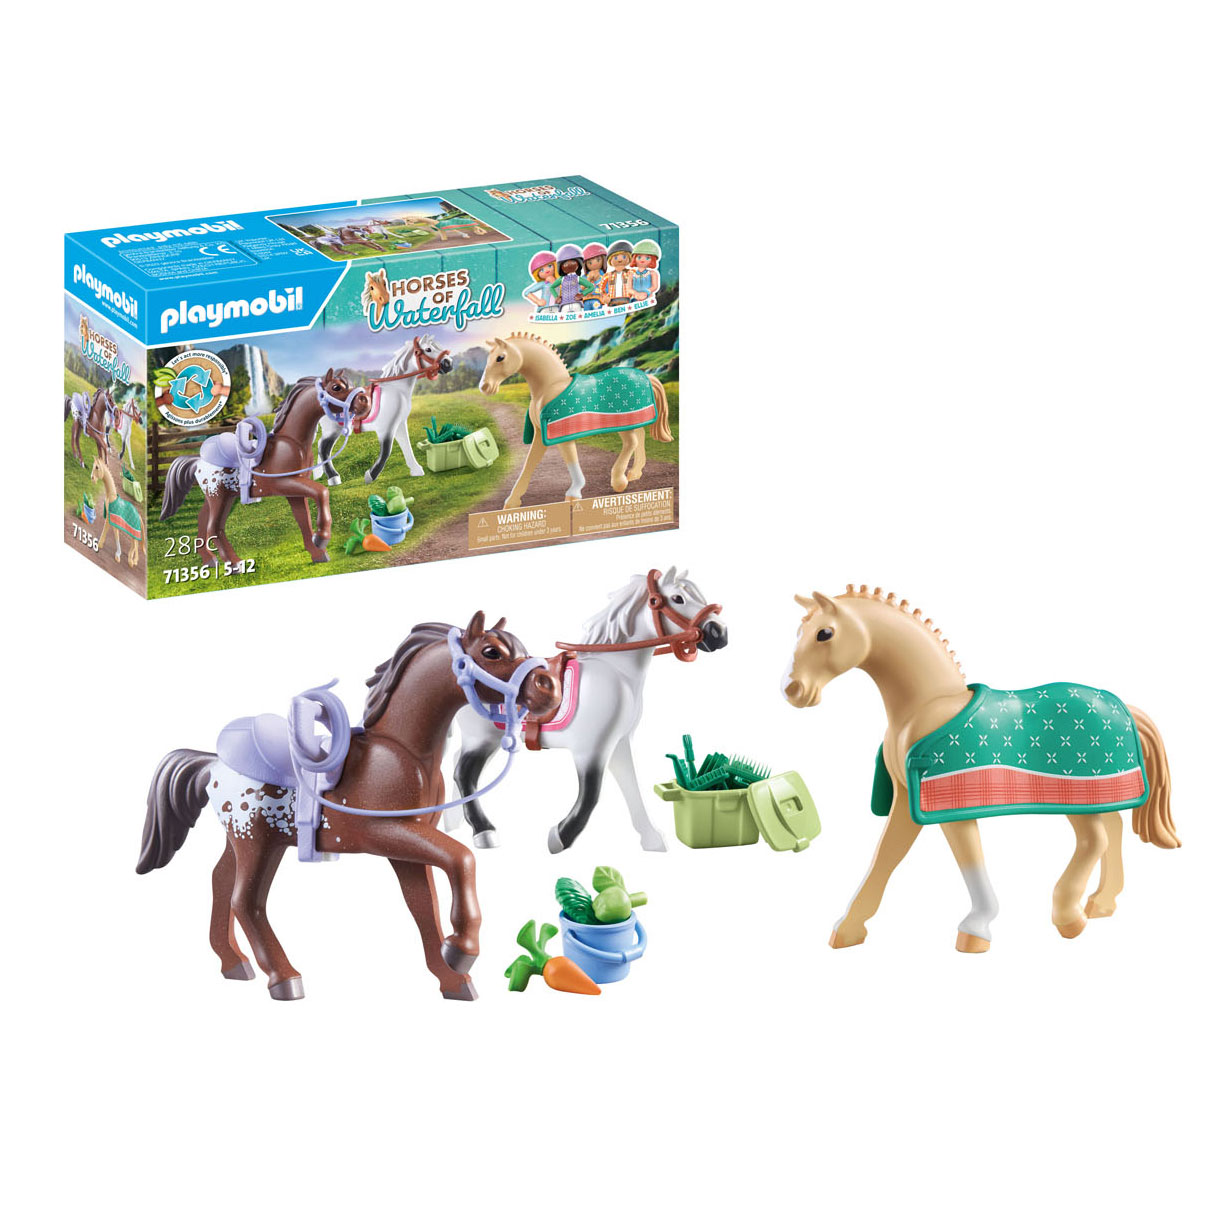 Playmobil Horses of Waterfall 3 Paarden met Accessoires - 71356